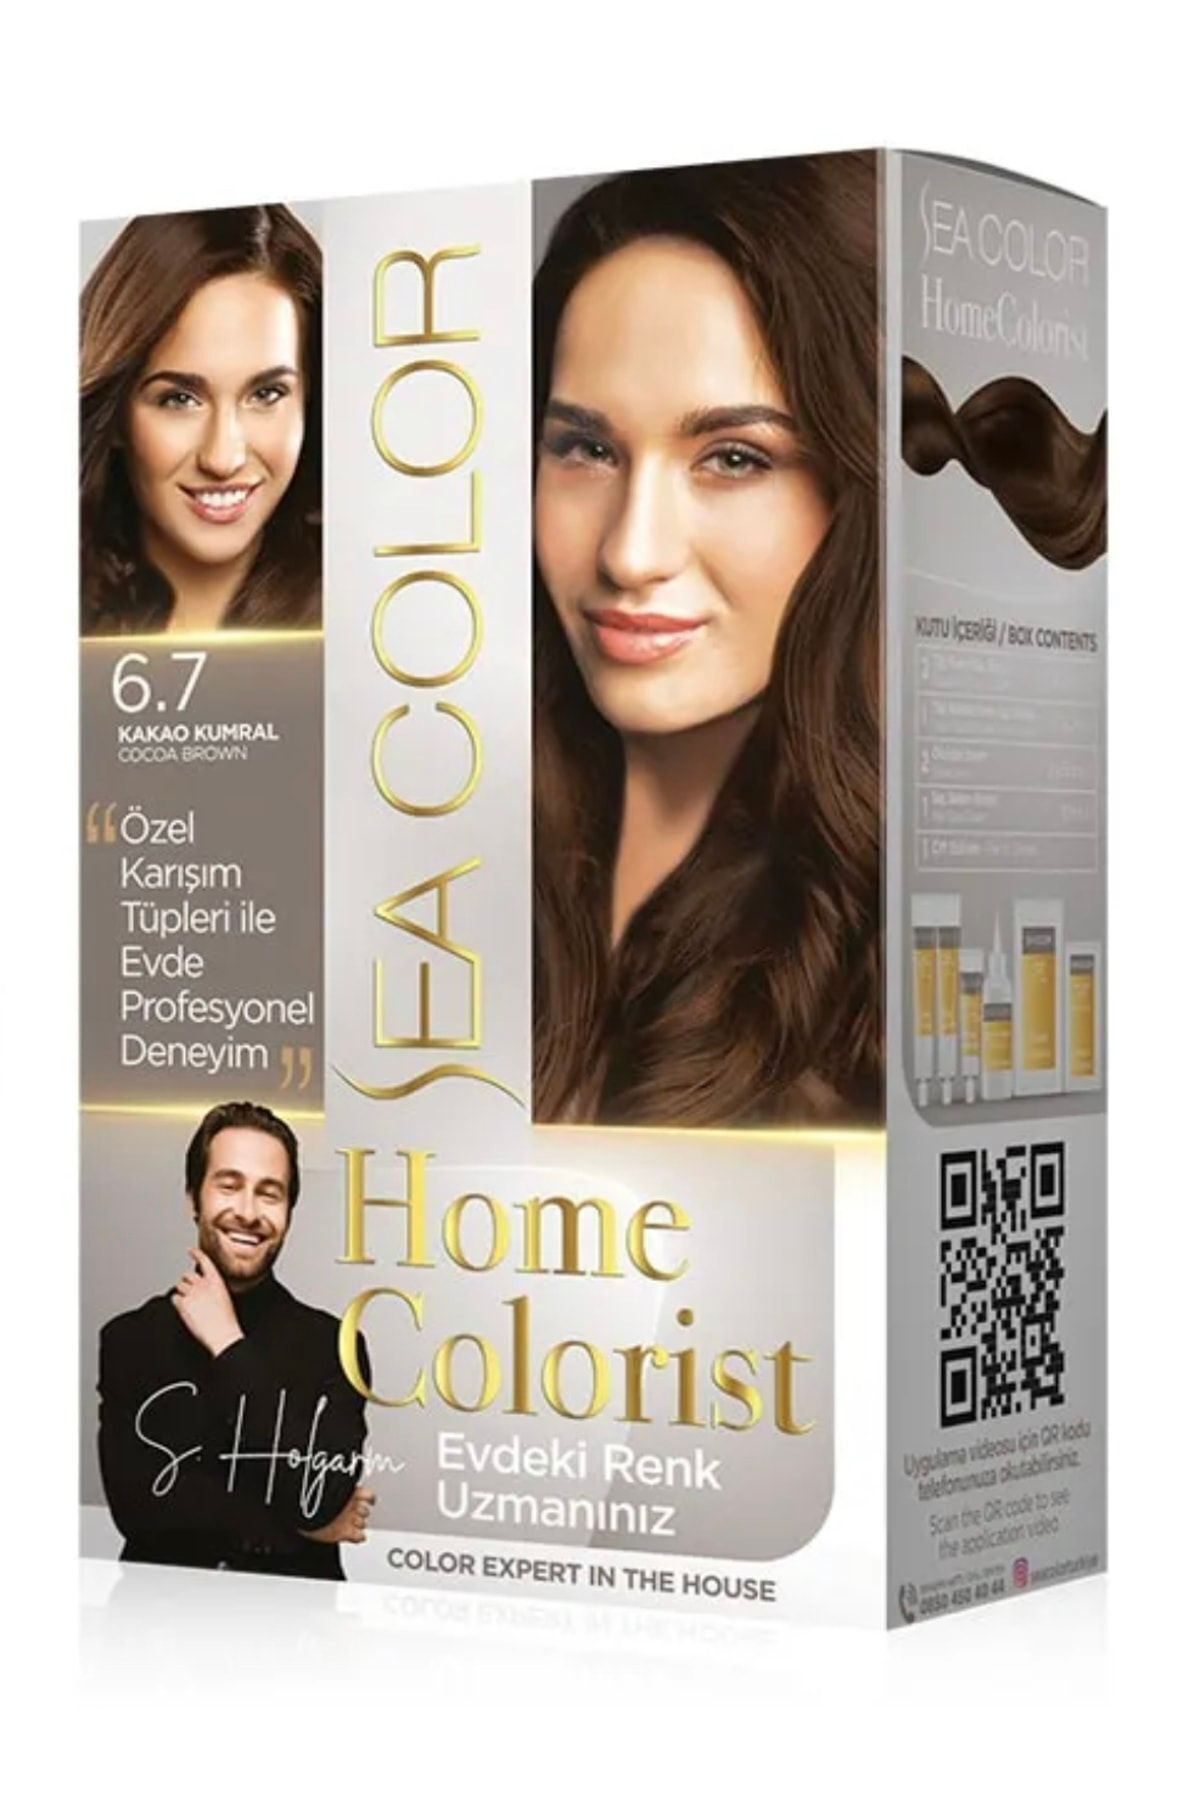 Sea Color Homecolorist 6.7 Kakao Kumral Saç Boyası